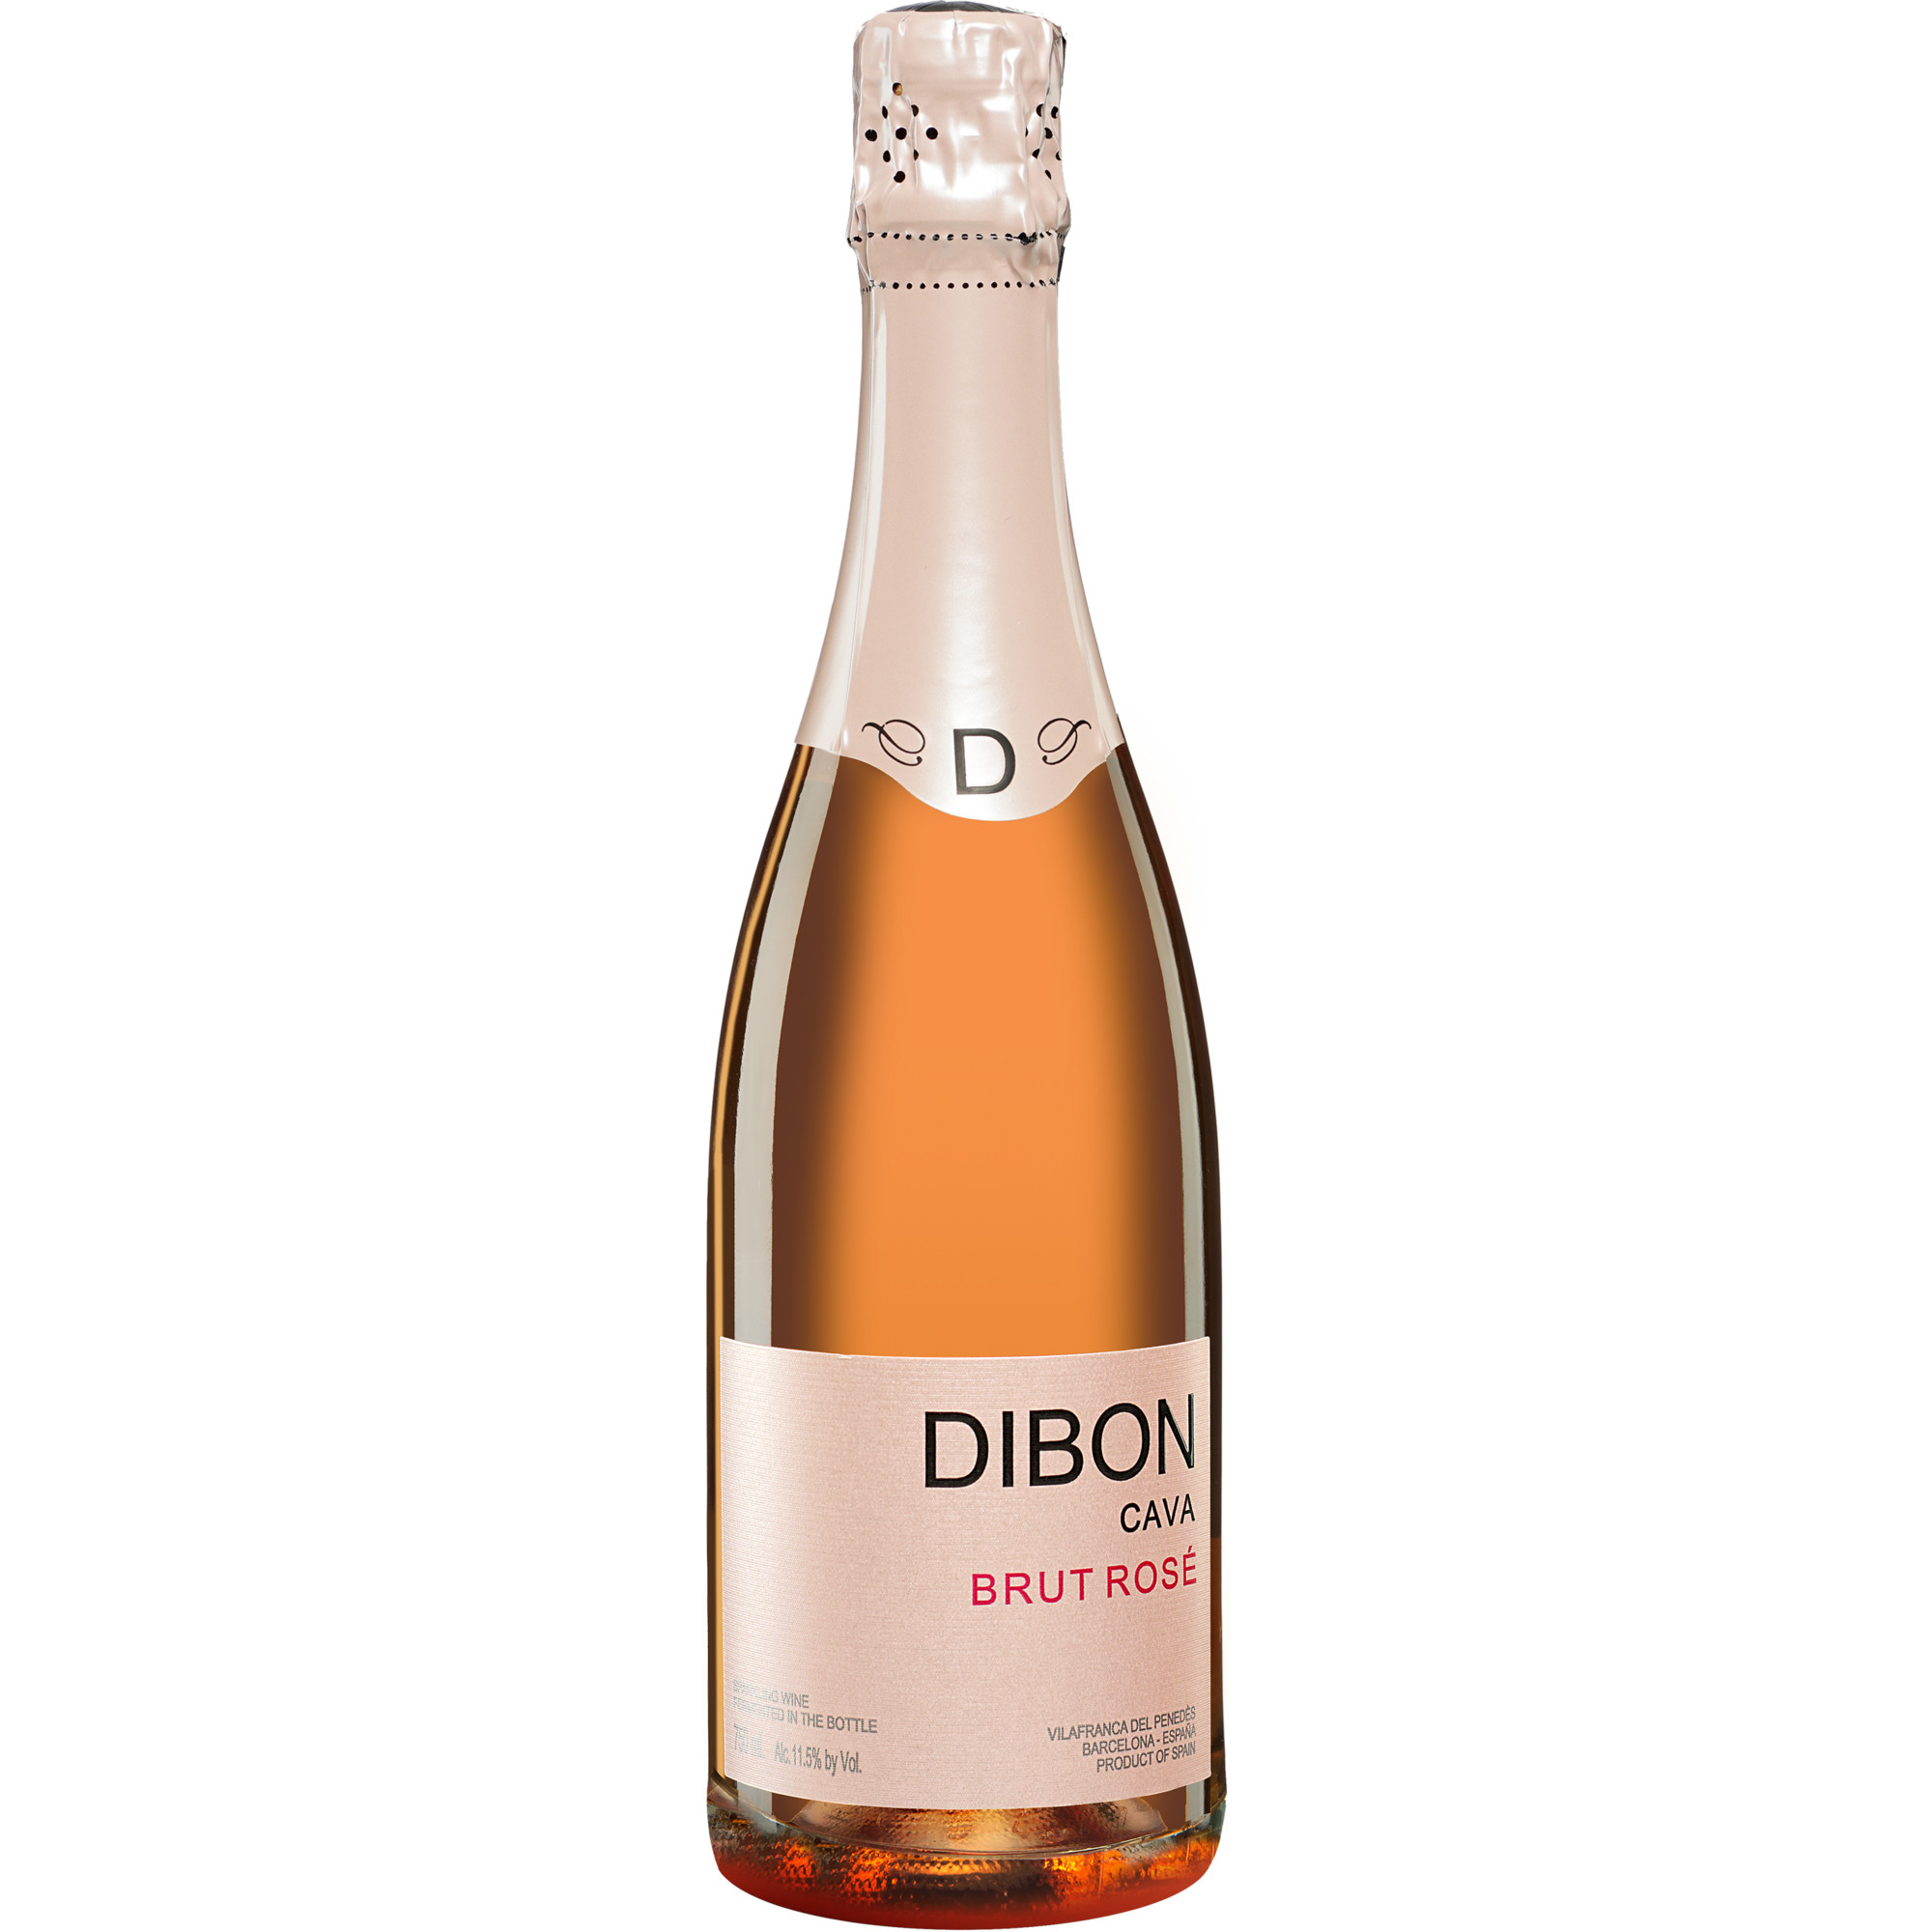 Image of "Dibon" Cava Brut Rosé